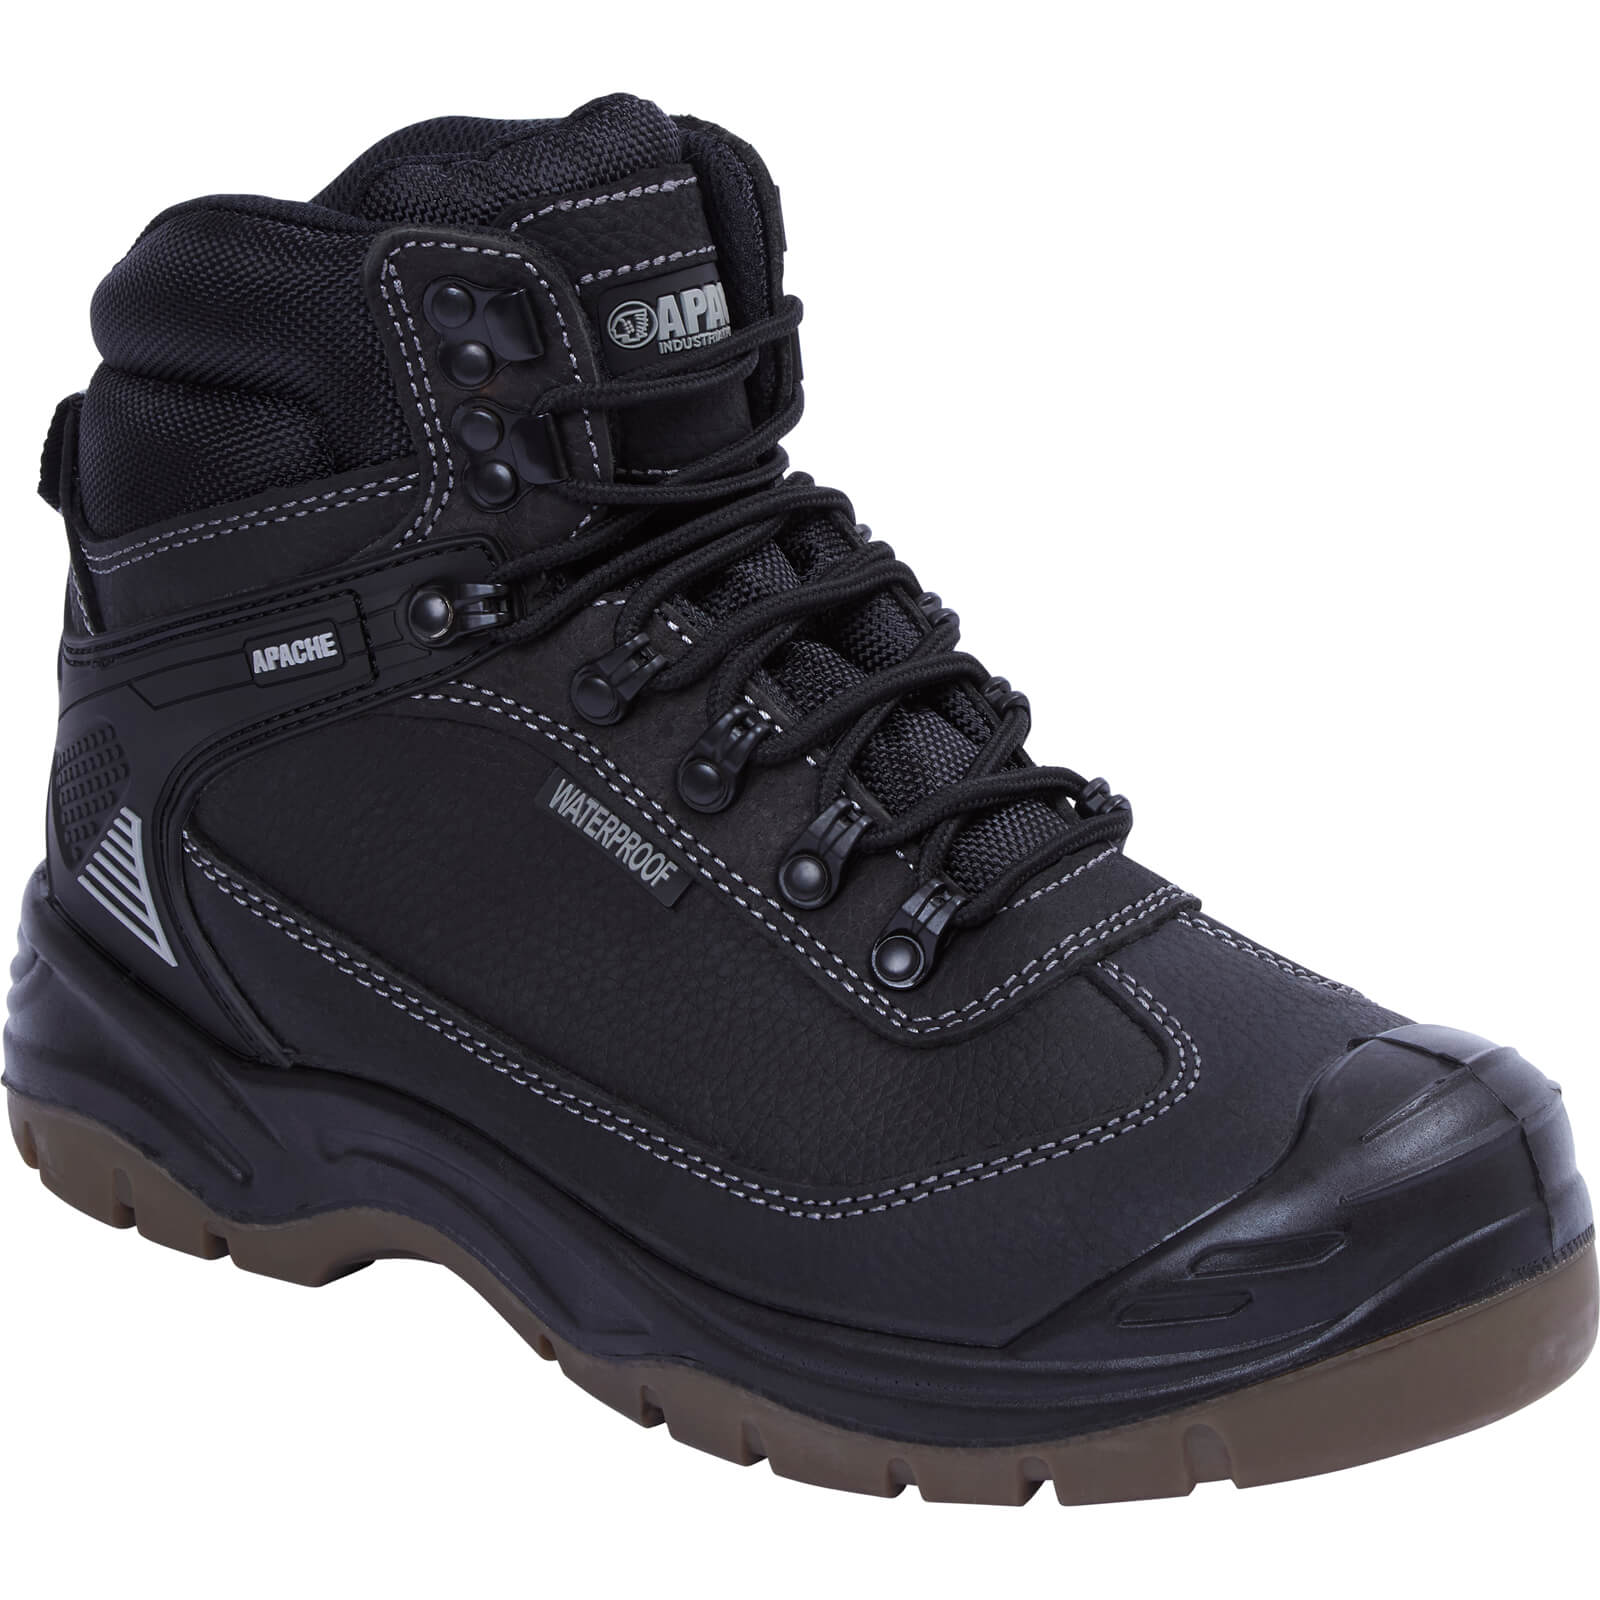 Apache RANGER Waterproof Safety Hiker Boots Black Size 12